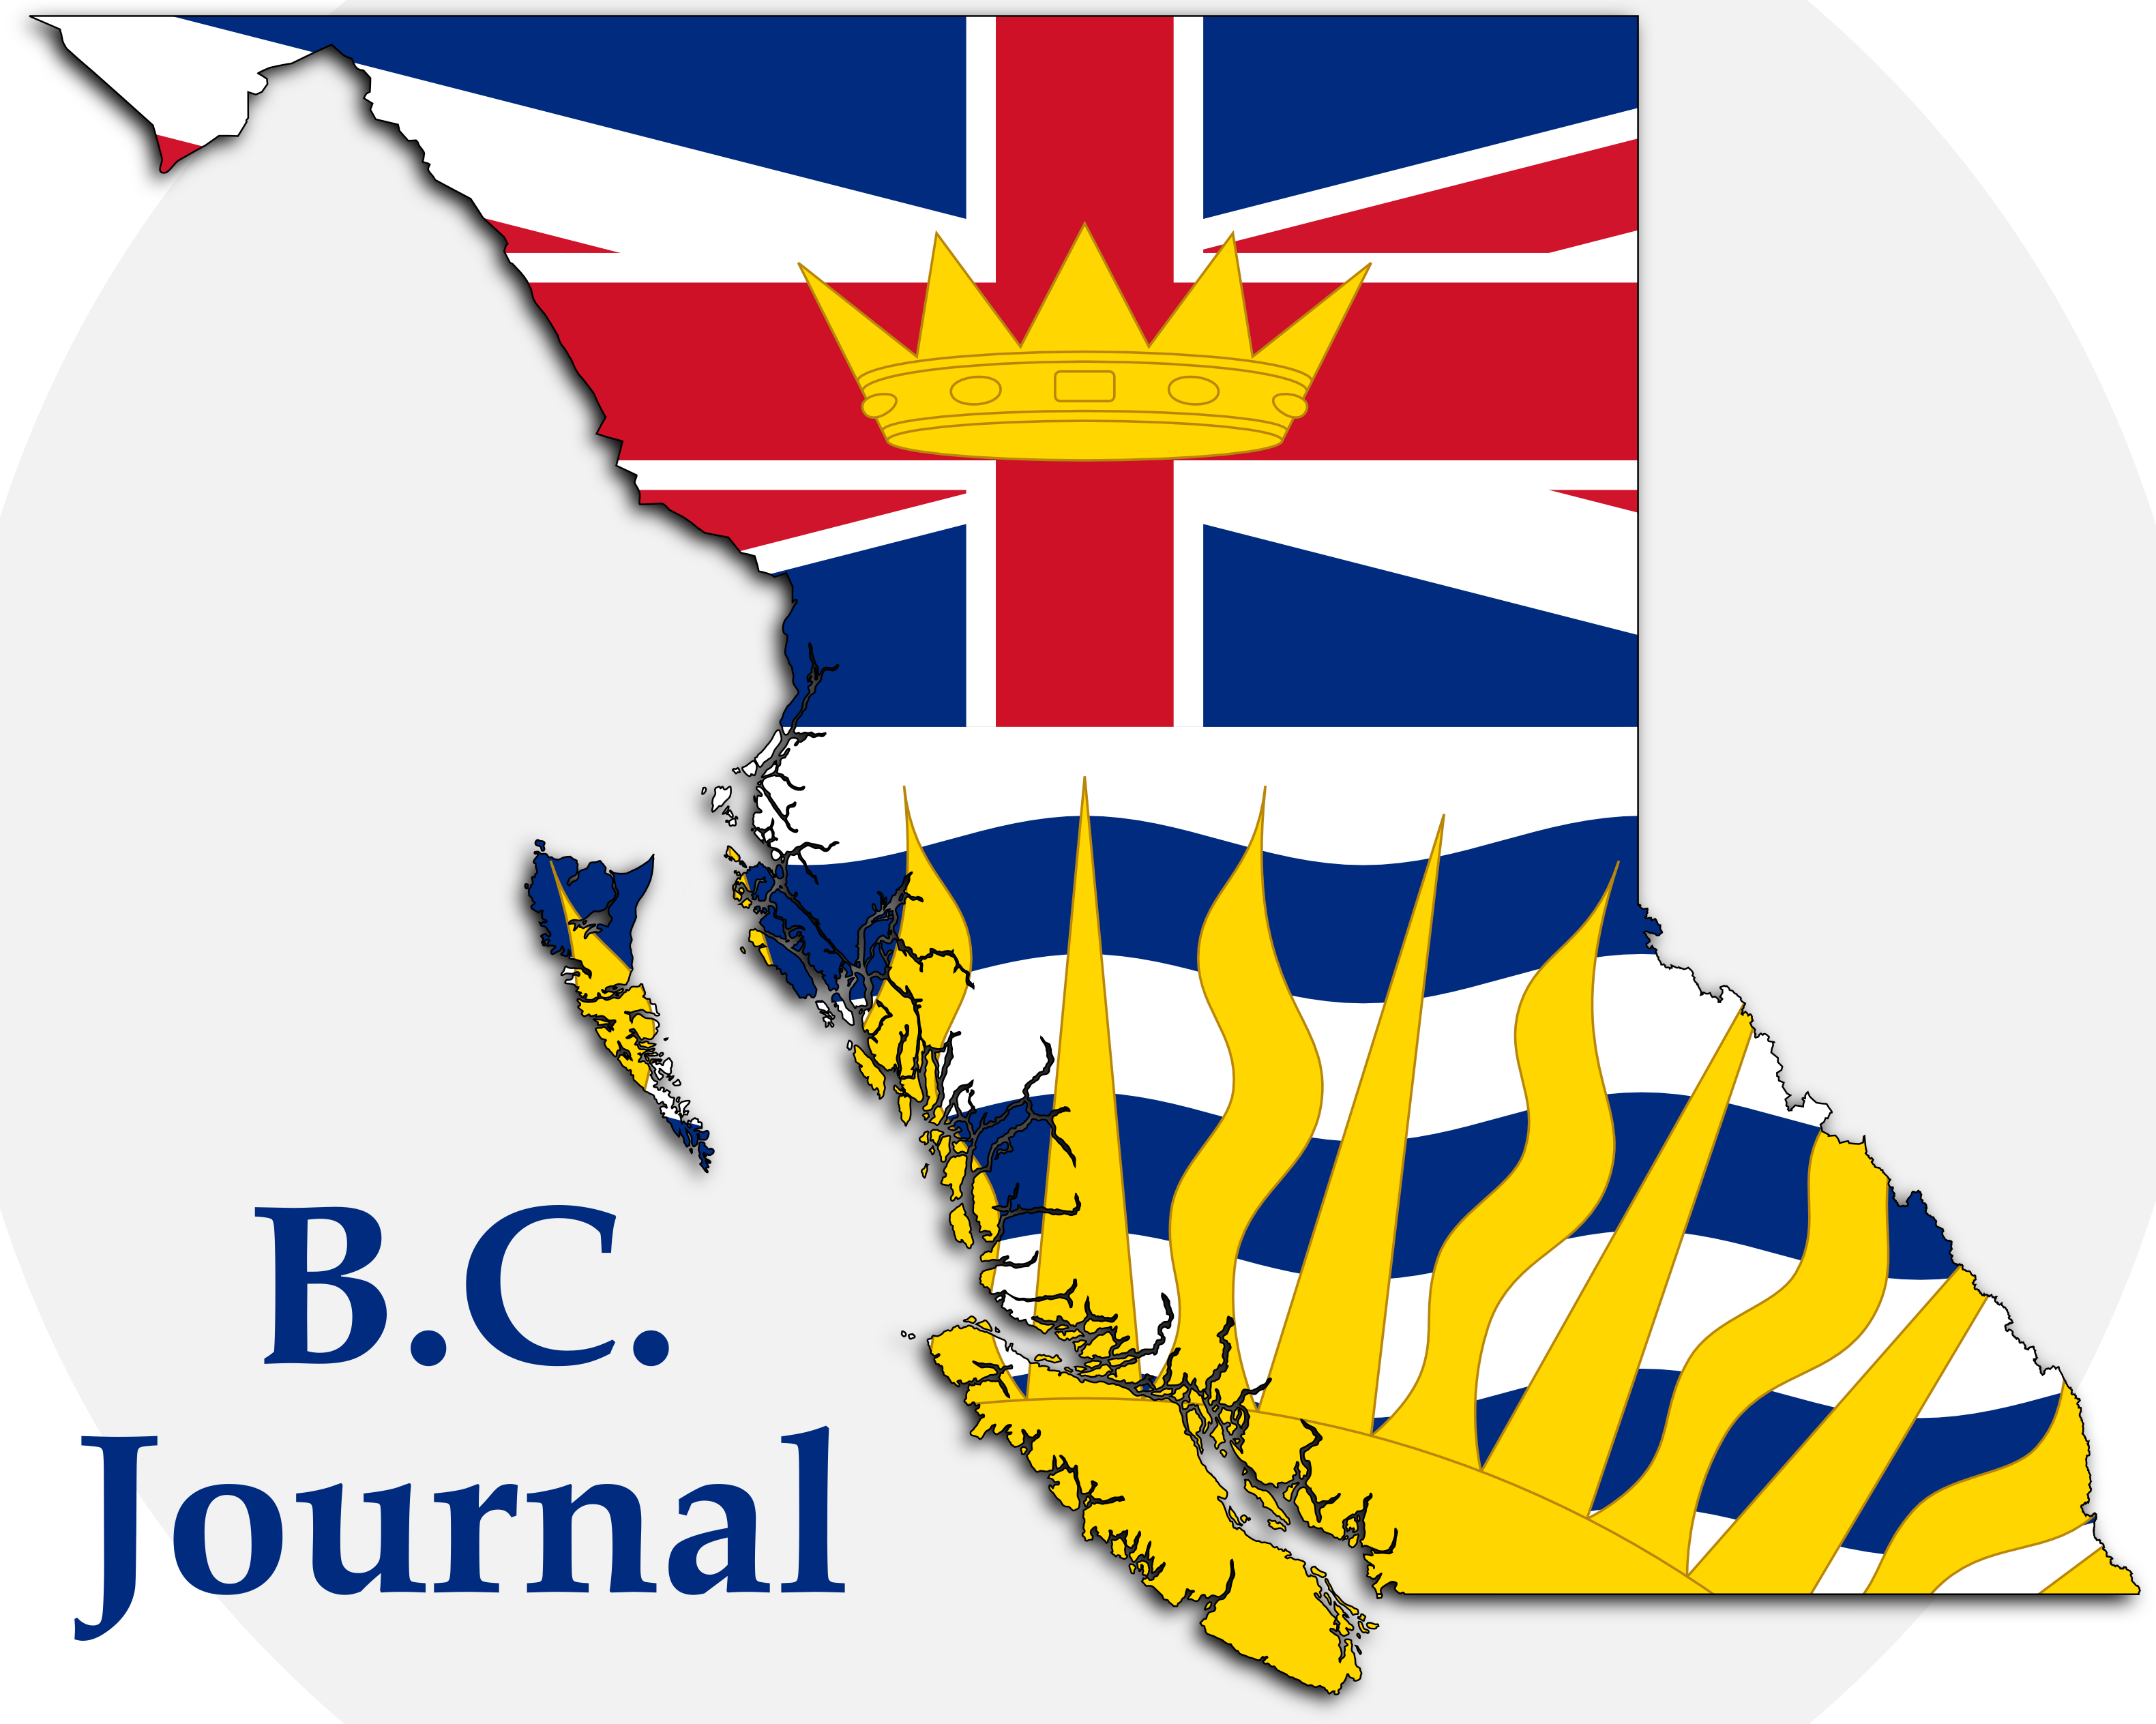 B.C. Journal